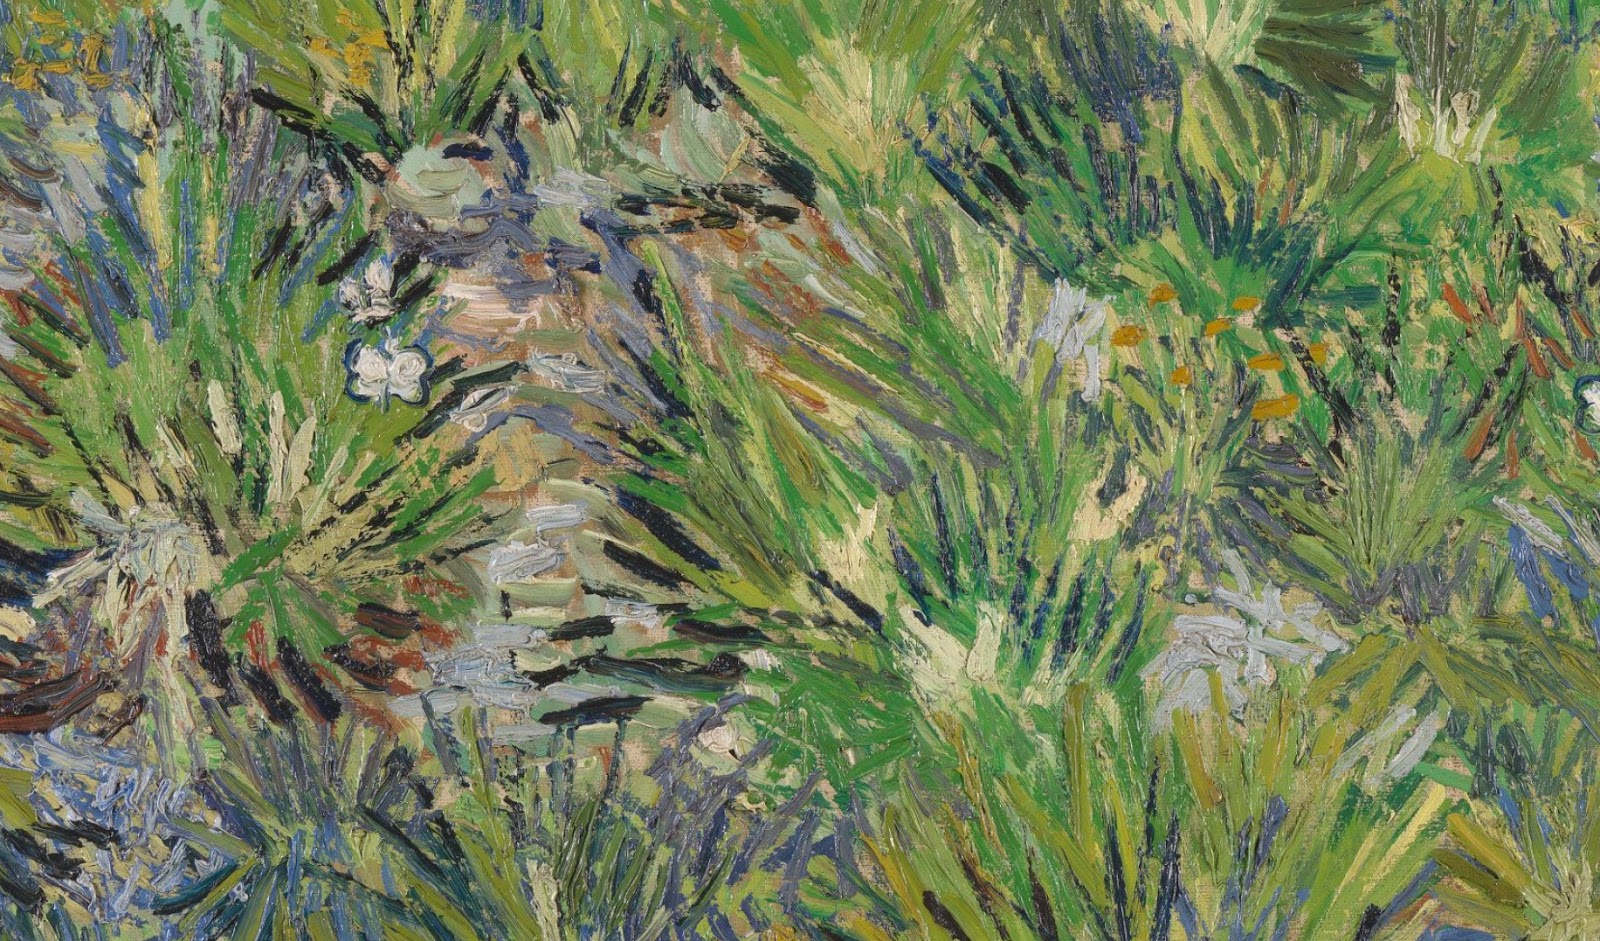 Vincent+Van+Gogh-1853-1890 (885).jpg